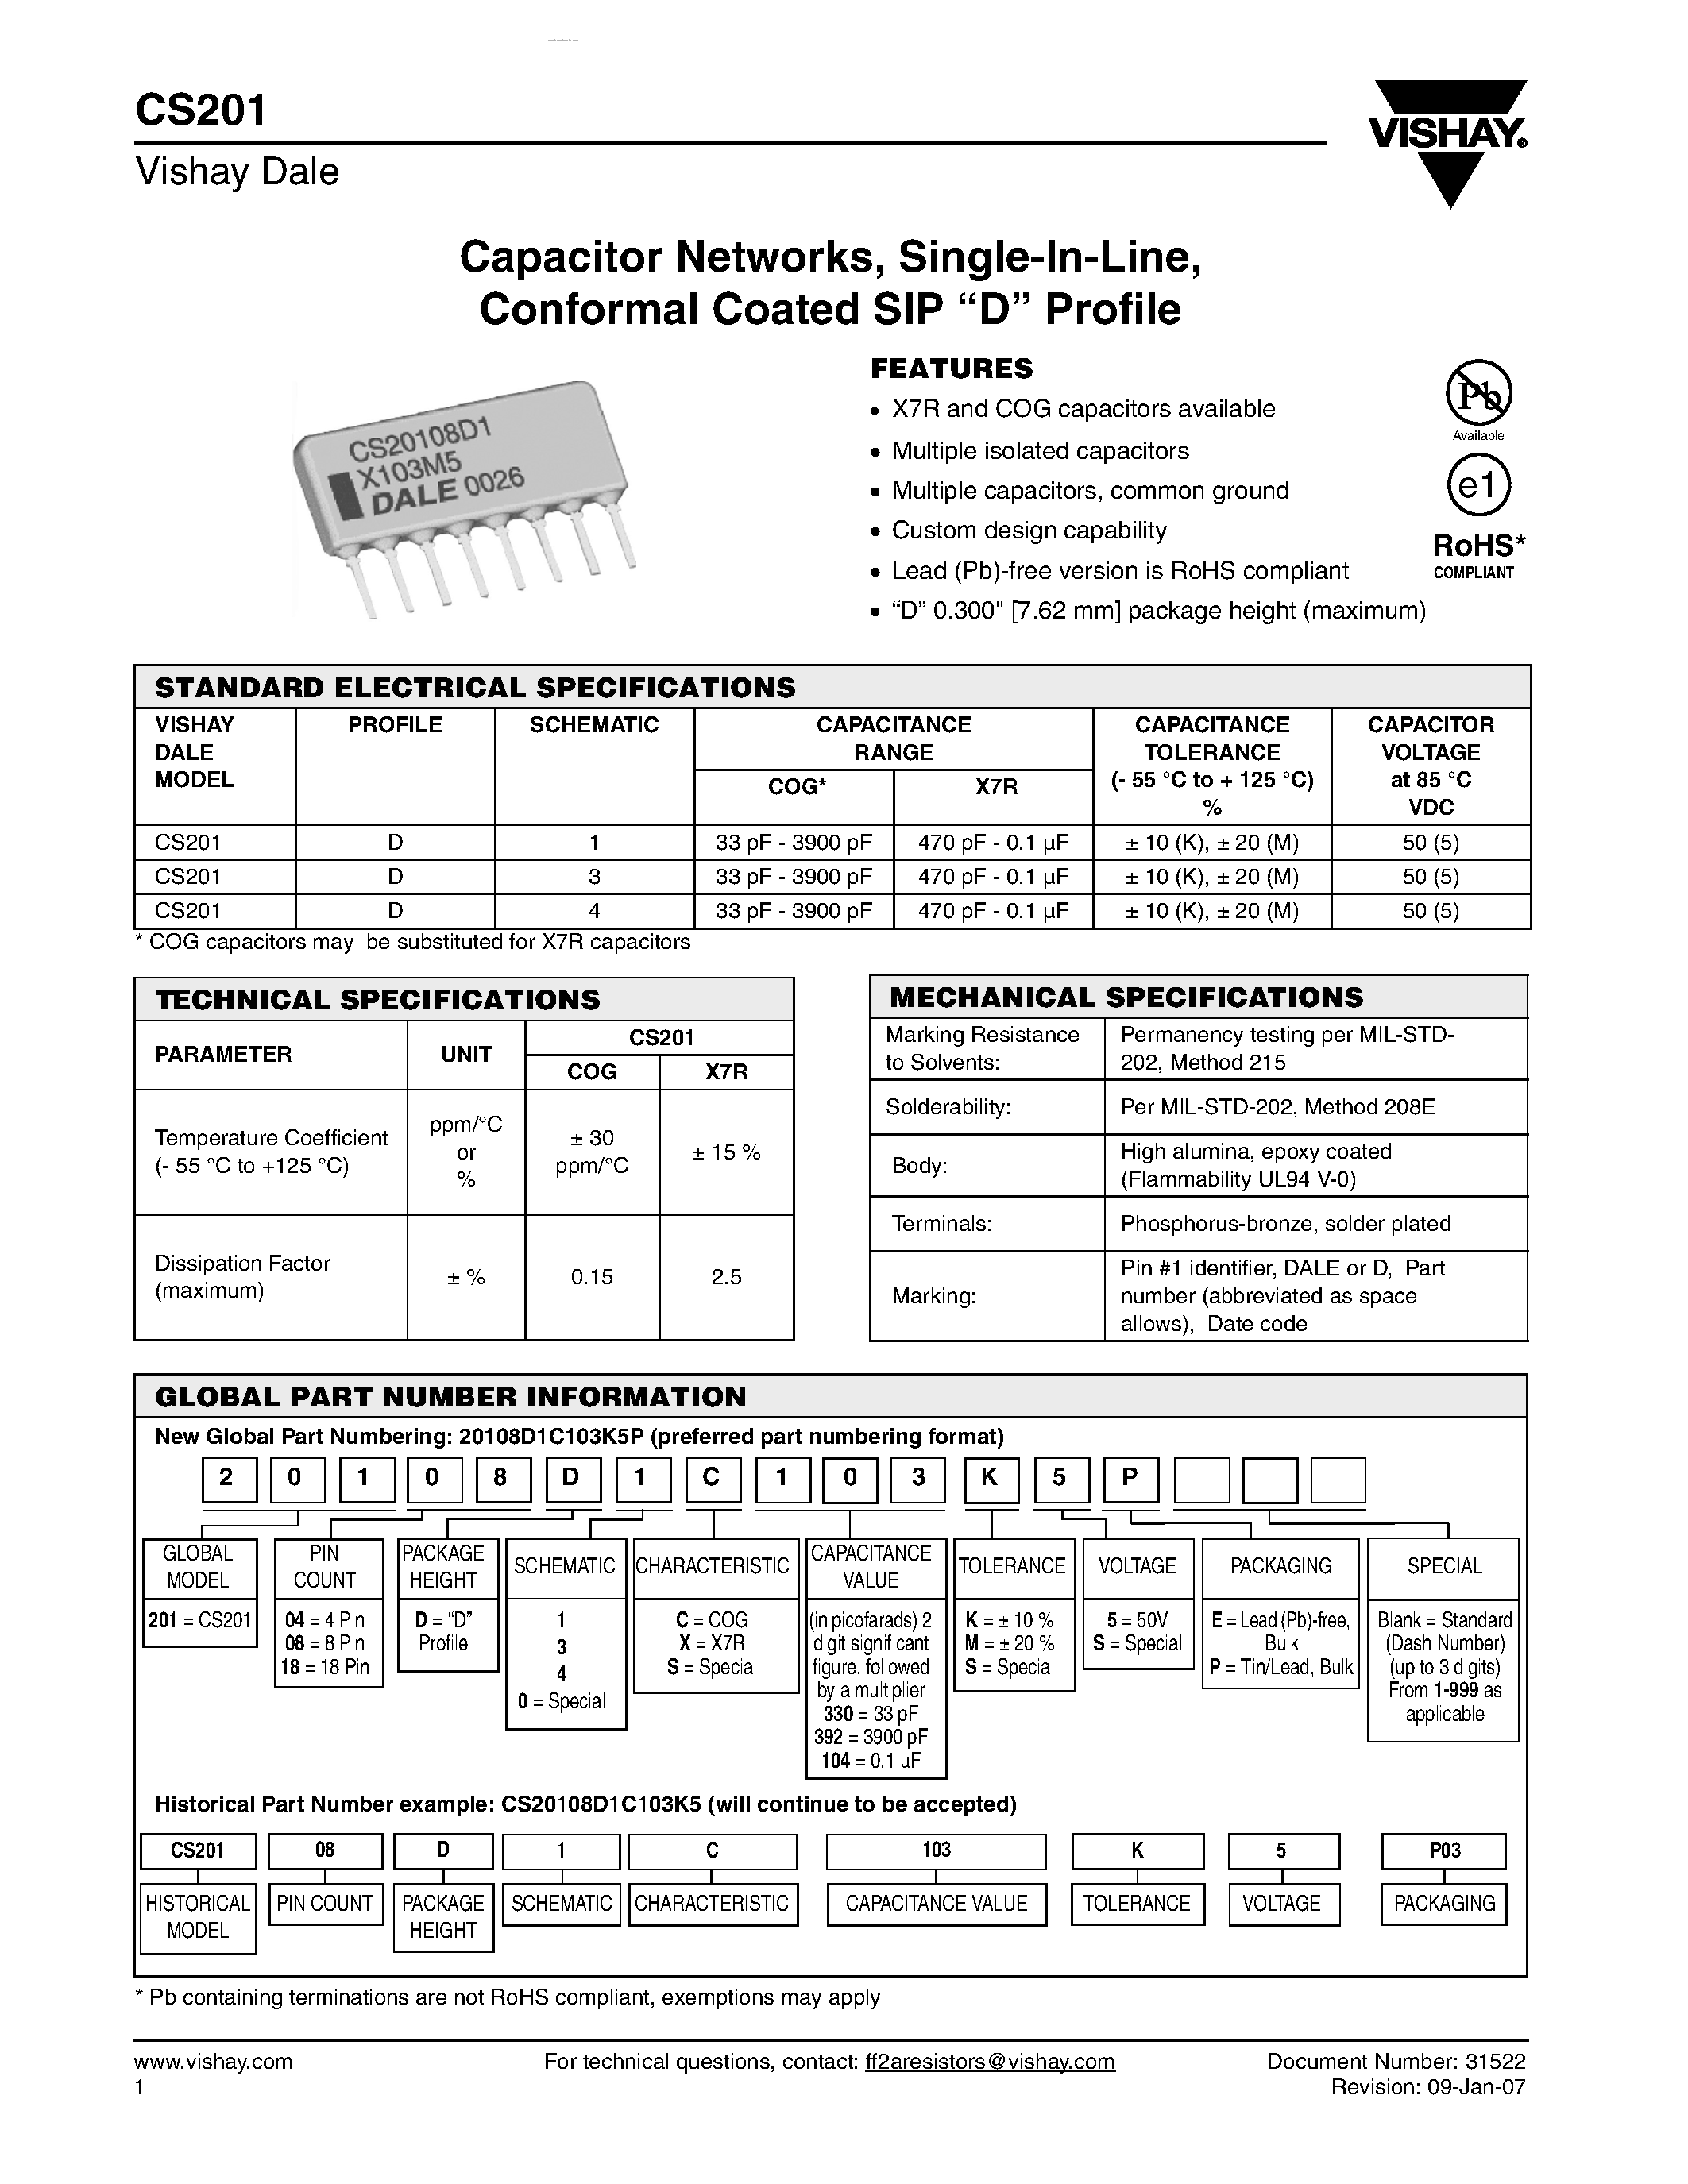 Даташит CS201 - Conformal Coated SIP D Profile страница 1